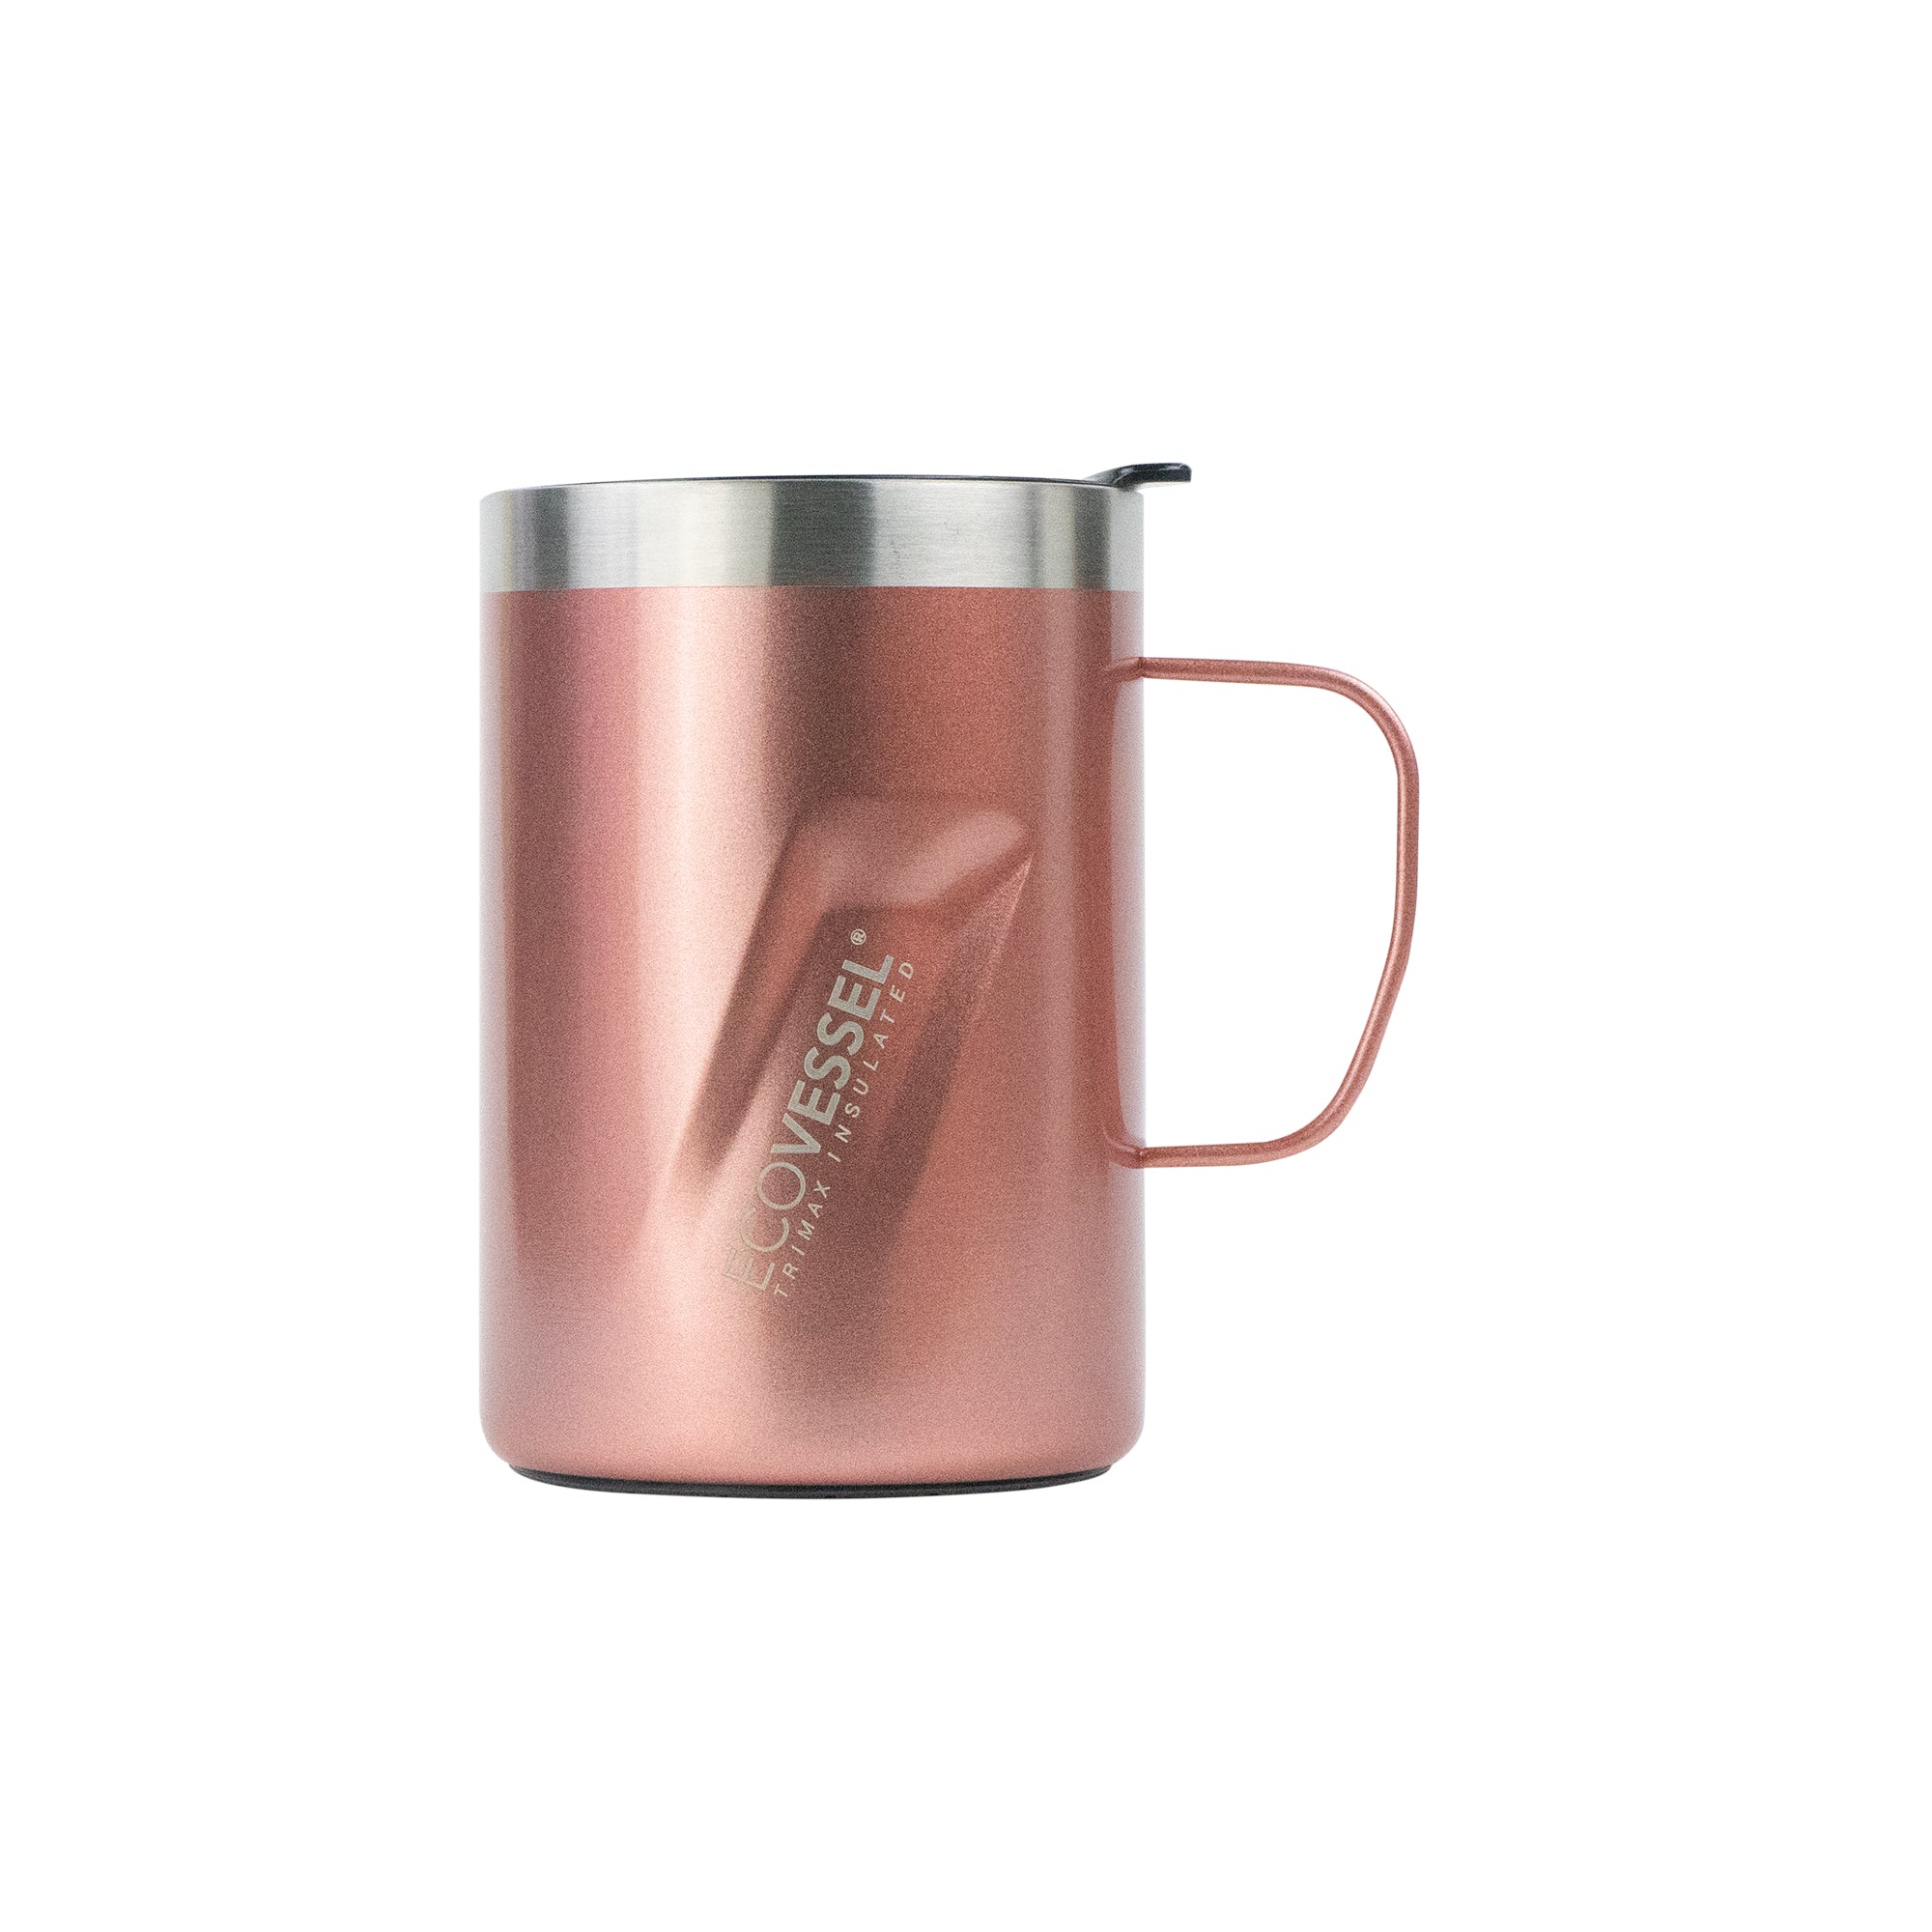 THE TRANSIT - Insulated Coffee Mug / Camping Mug - 12 oz - Past Season Colors